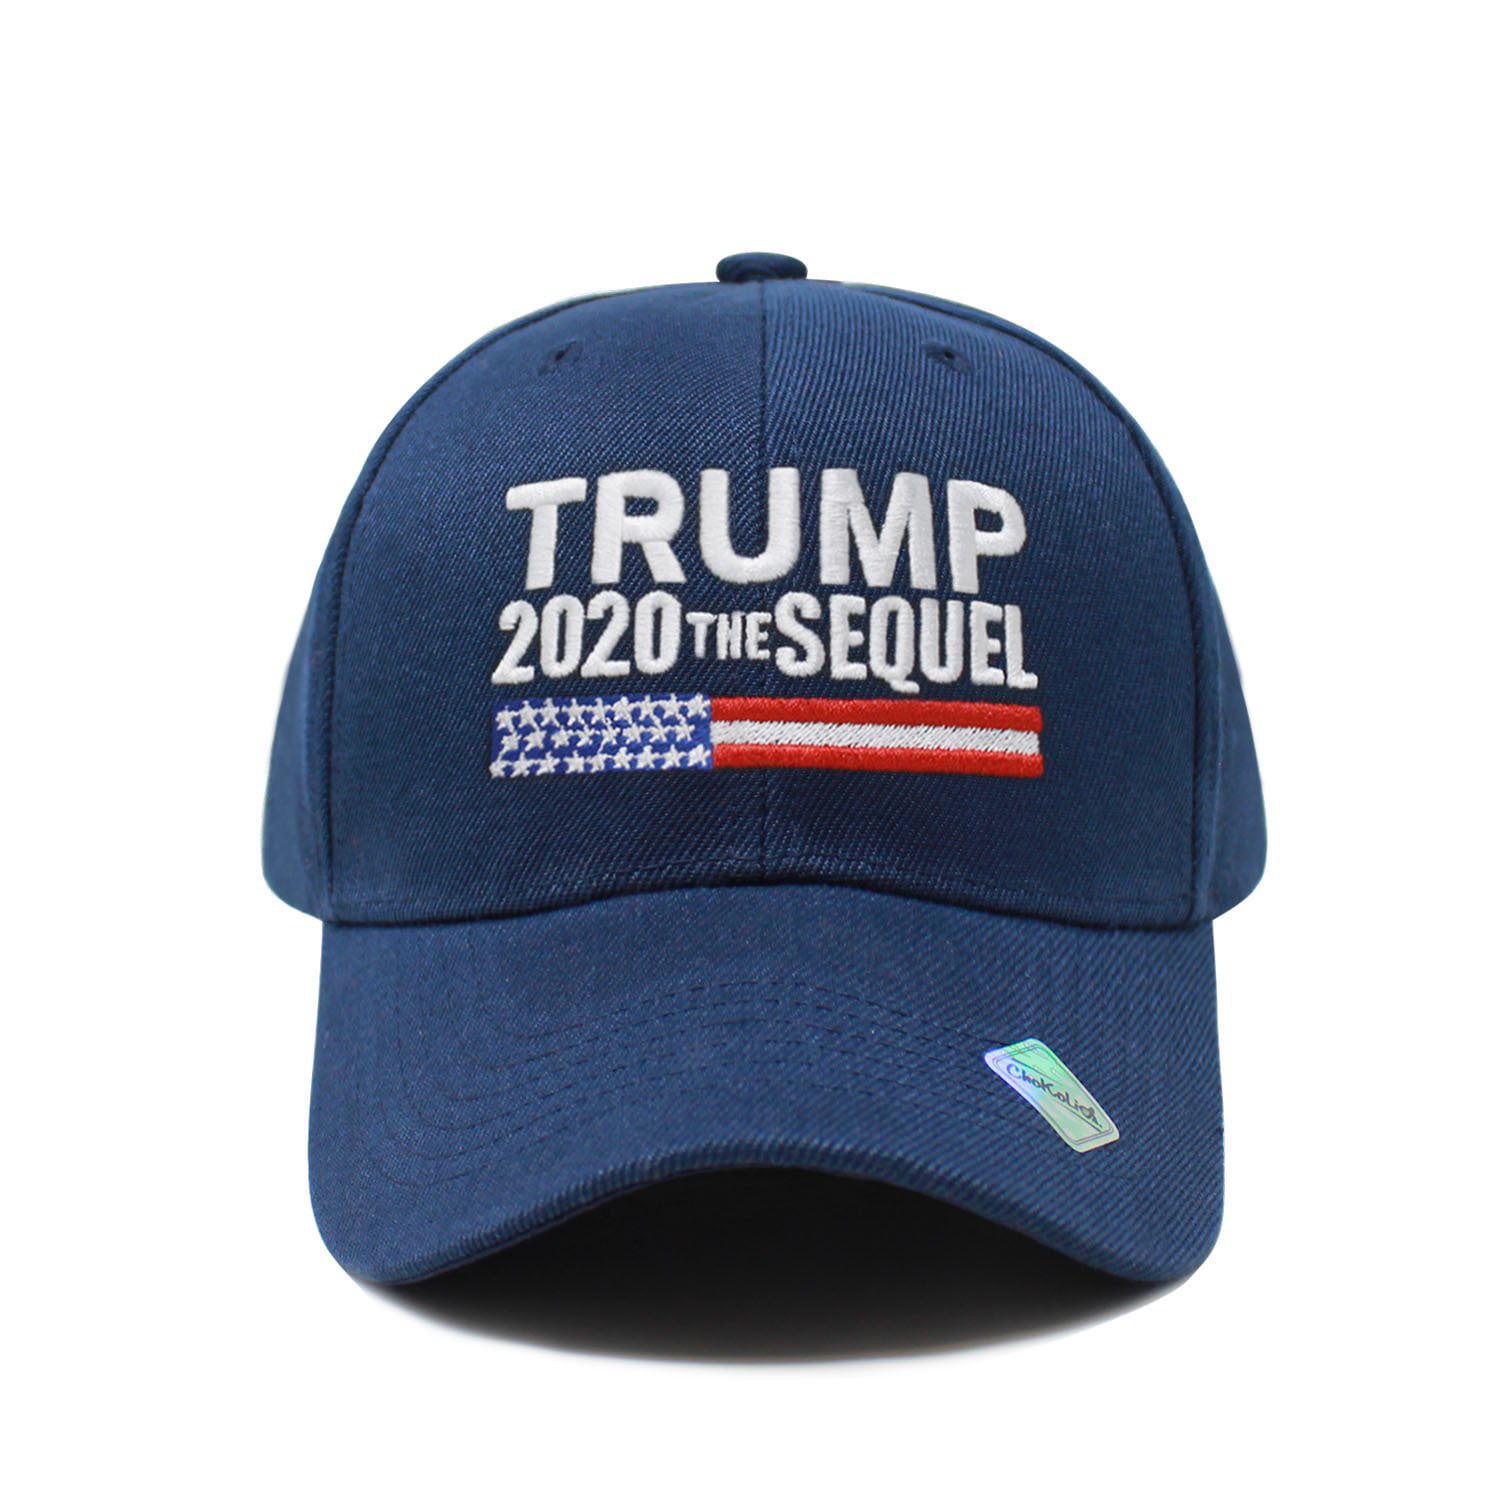 PROMISES MADE PROMISES KEPT Blue baseball cap hat Campaign 2018 